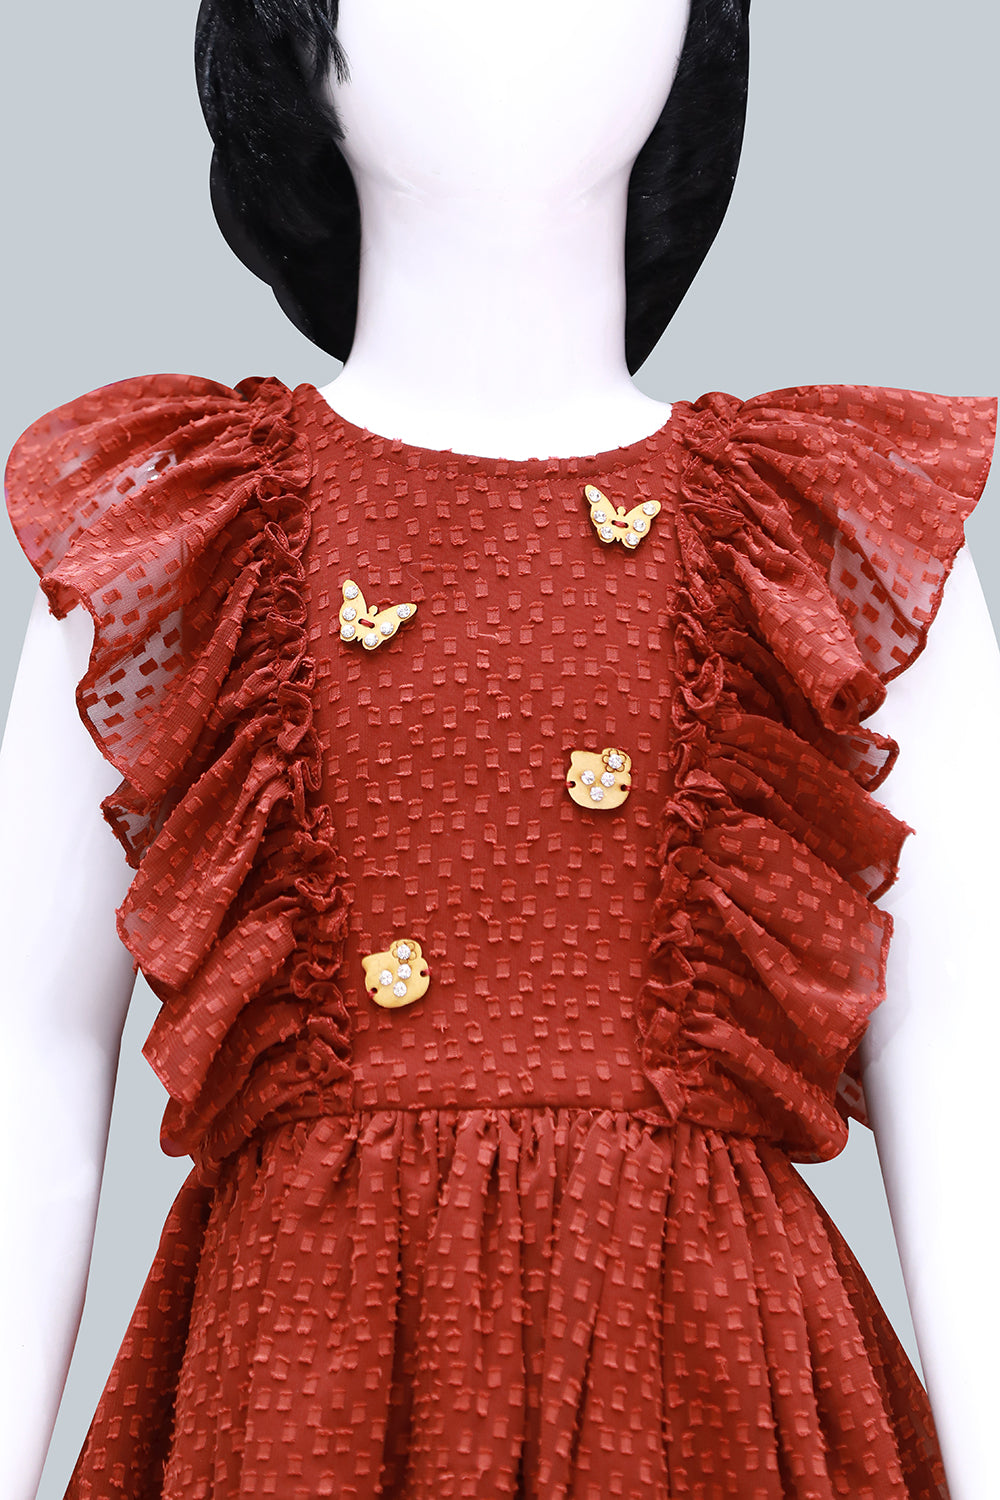 Ruffled Gown Design Patterns  6 Month Old Baby Girls Party Wear  The  Nesavu  The Nesavu